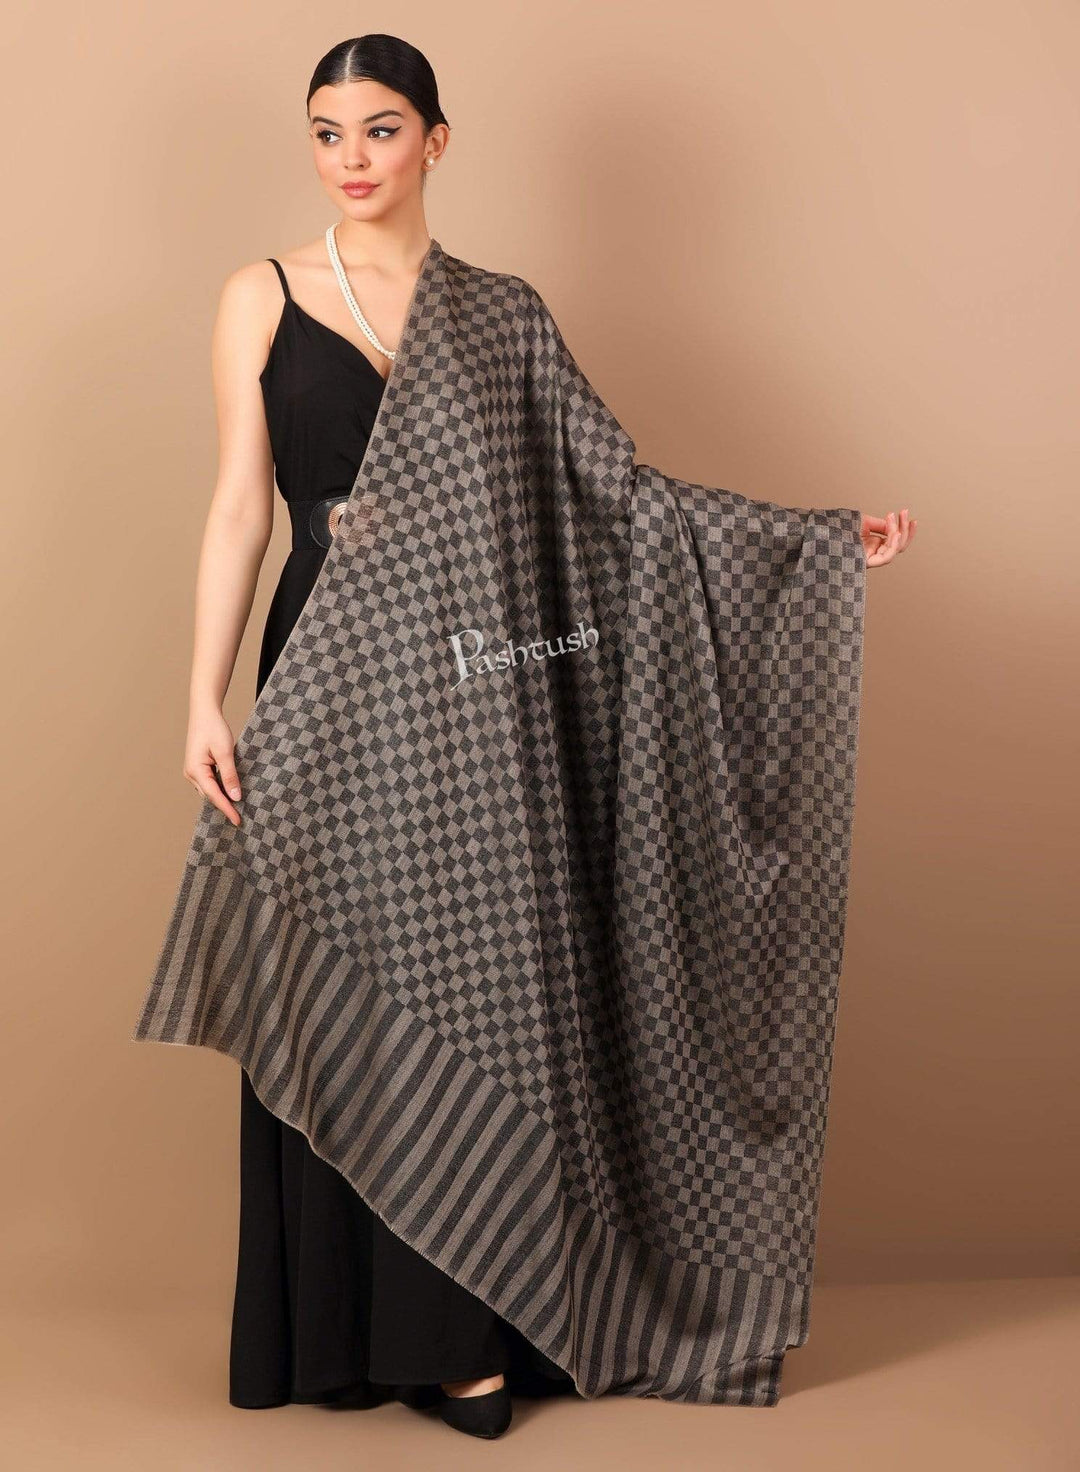 Pashtush Shawl Store Shawl Pashtush Womens Extra Fine Wool Shawl, Soft and Warm, Black, Chess Checks ( Large Wrap Size )